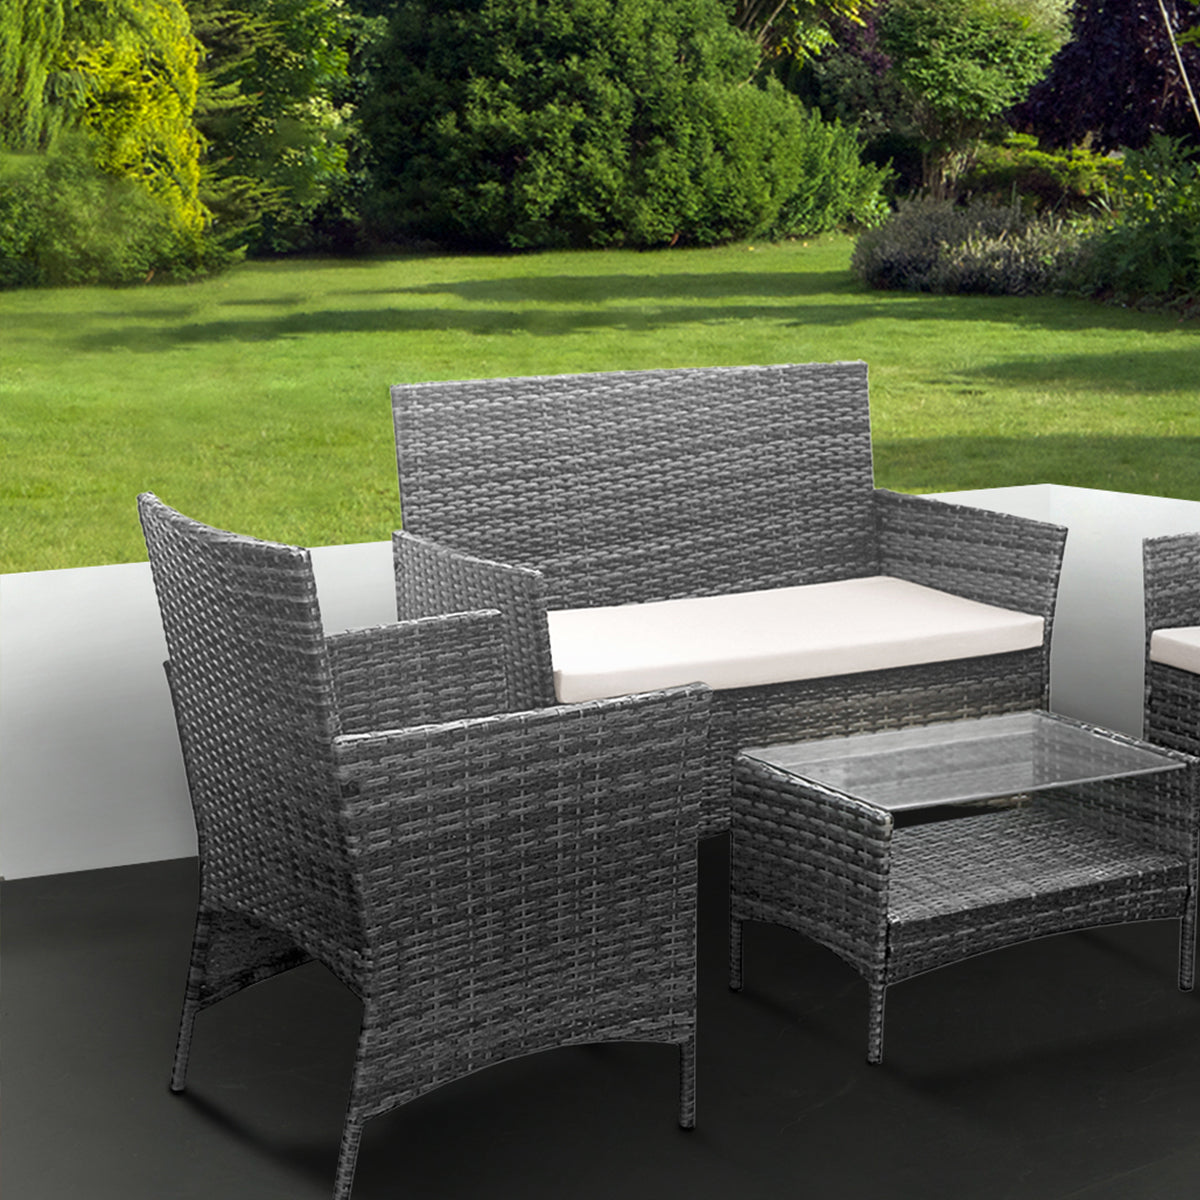 Enhance Your Outdoor Living Spaces - Buy Outdoor Furniture - UK